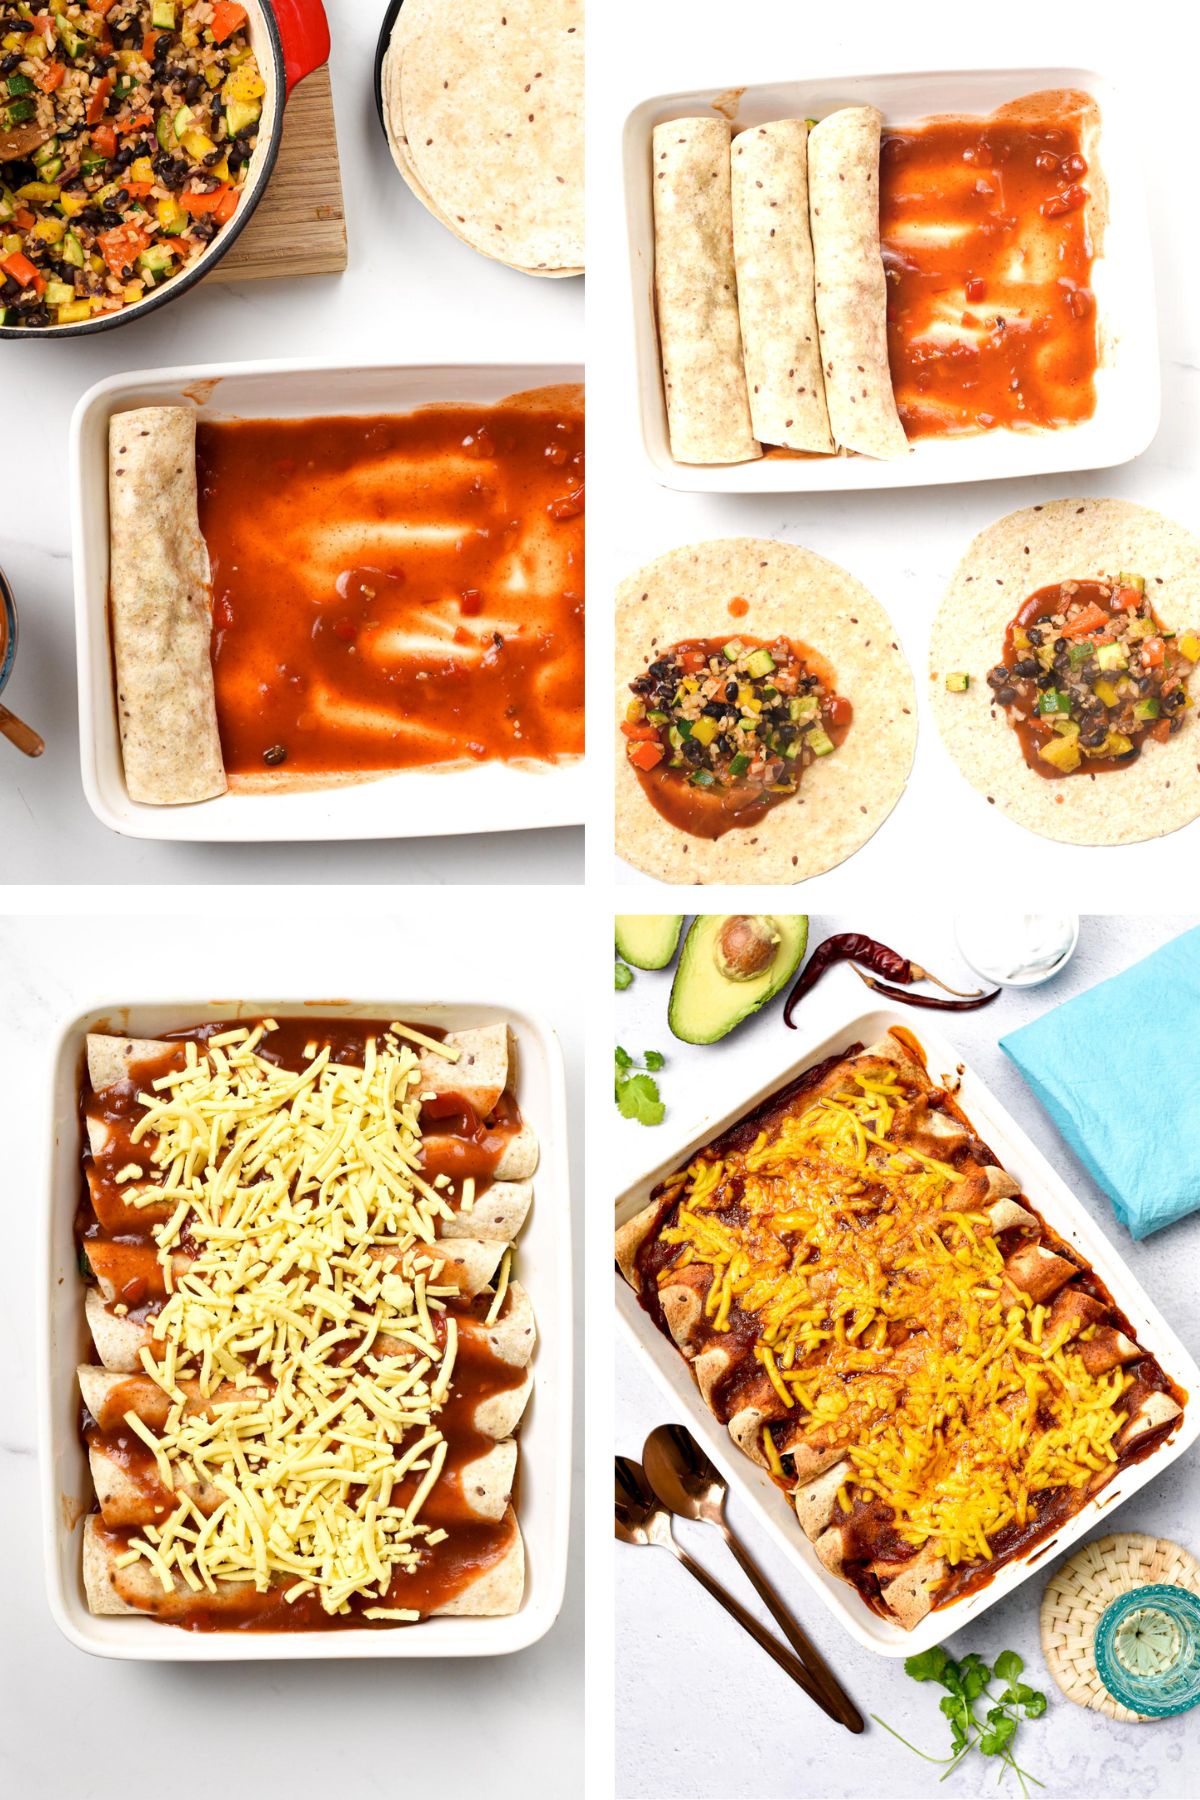 How to make Vegan Enchilada recipe